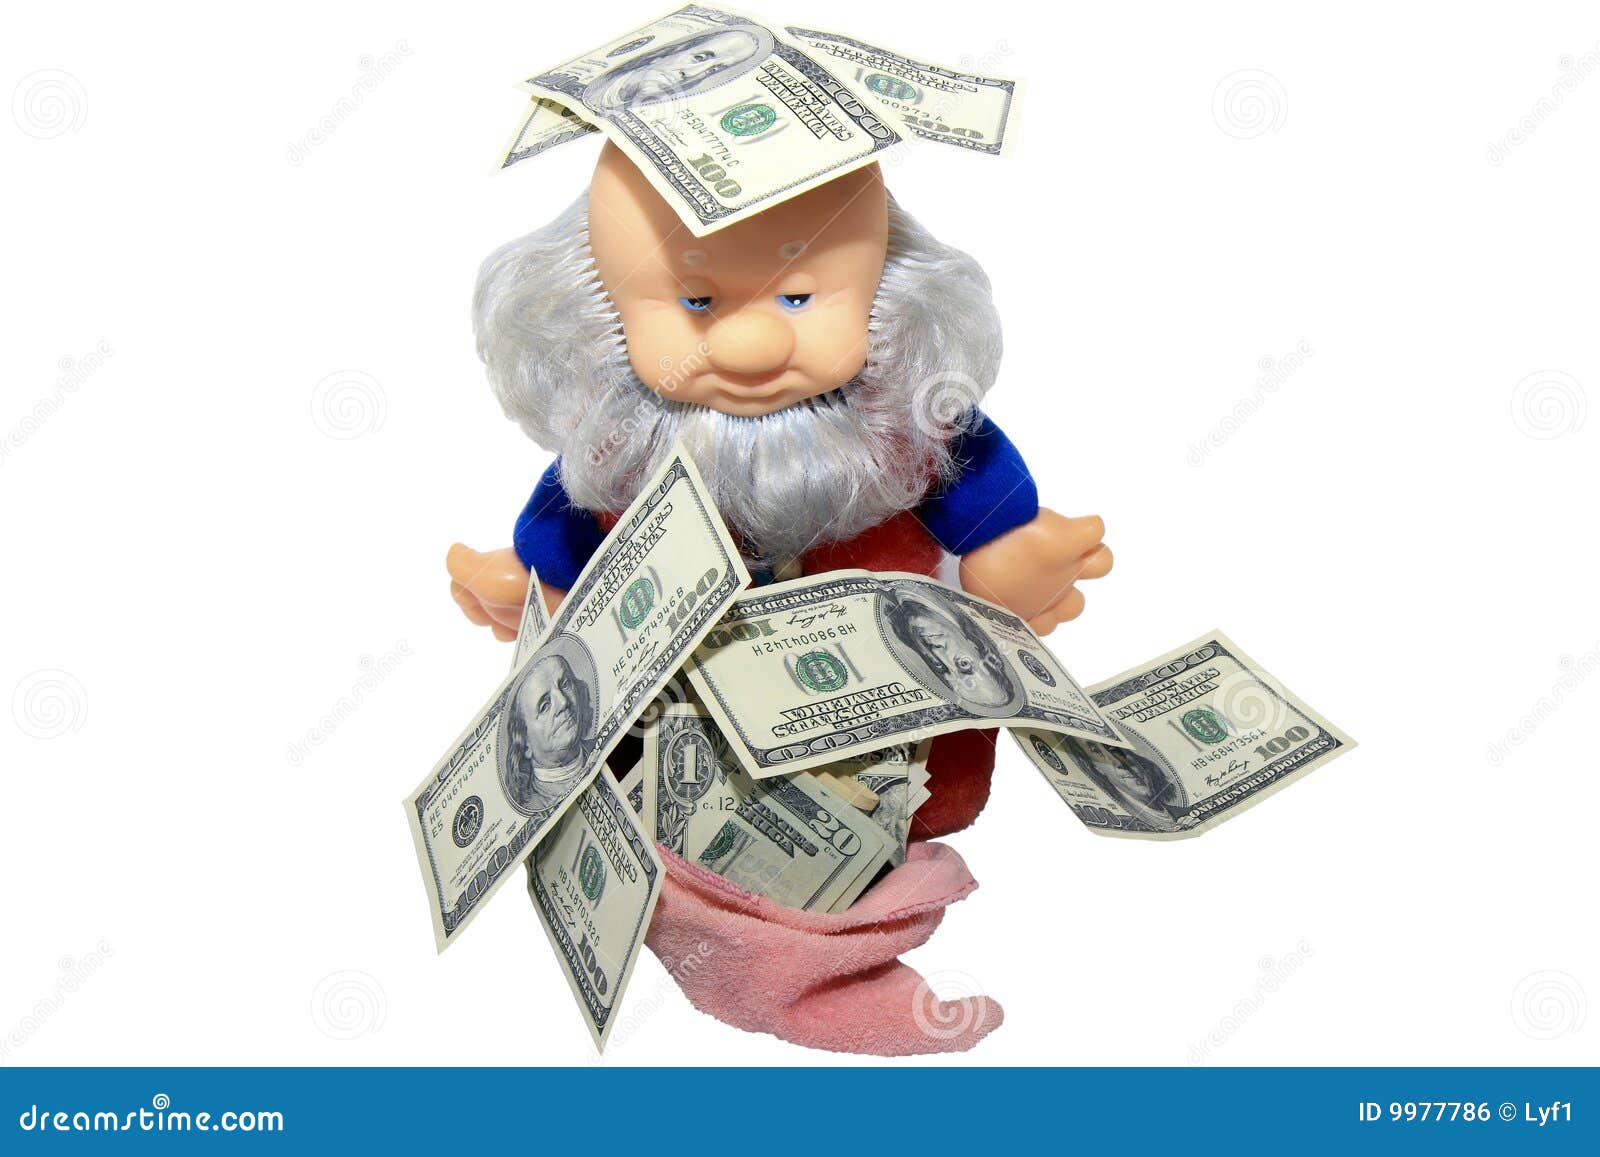 money-wealthy-gnome-9977786.jpg